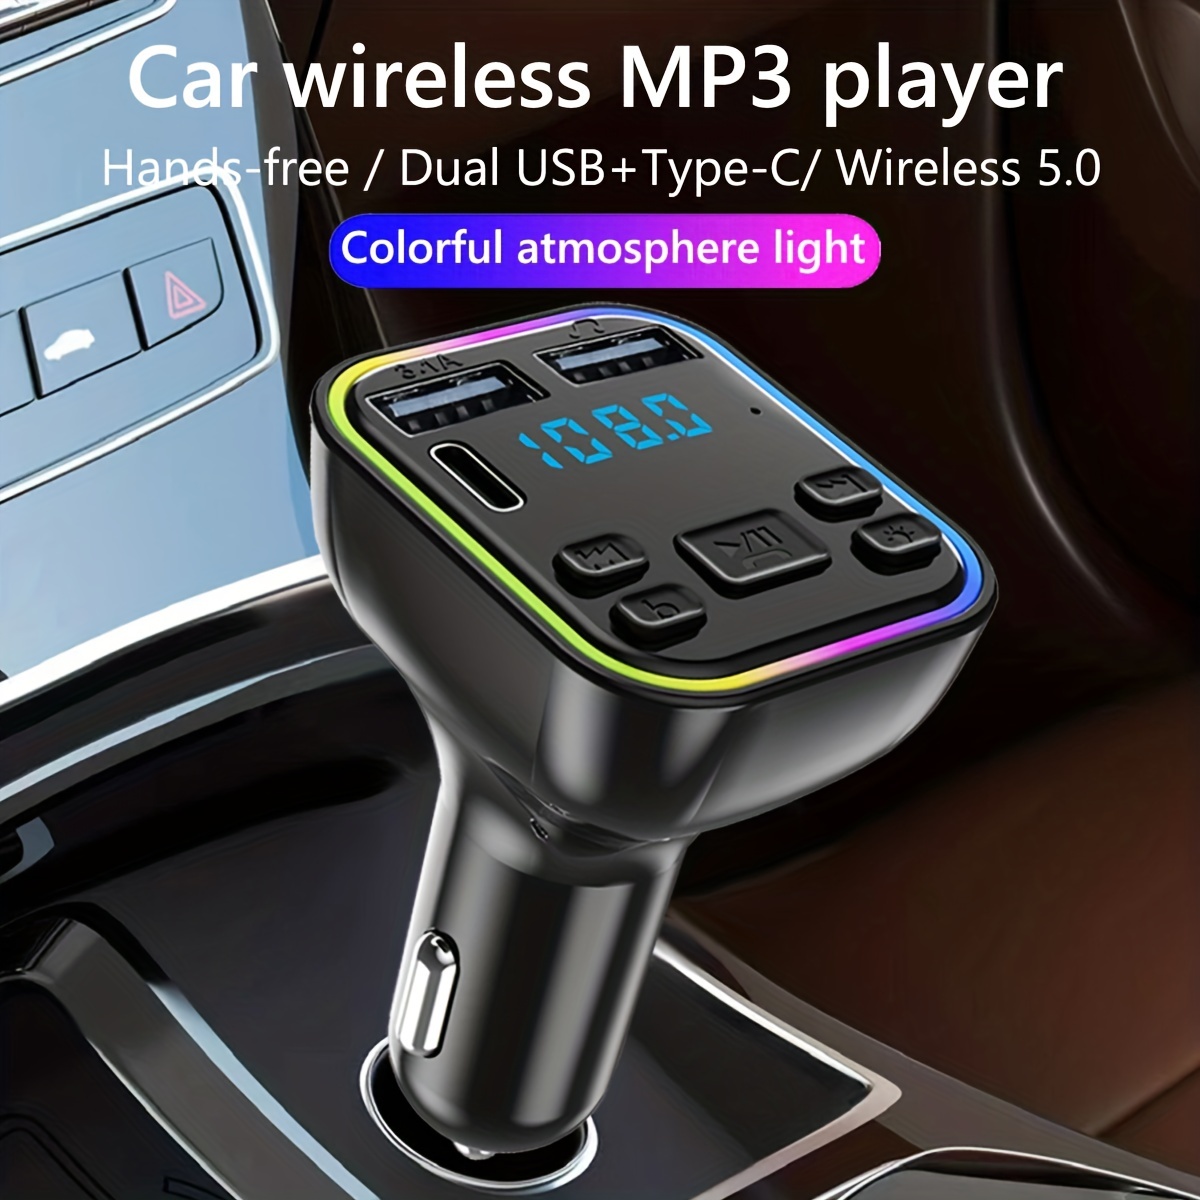 Upgrade Car Audio System Jajabor Wireless 5.0 Fm Transmitter - Temu